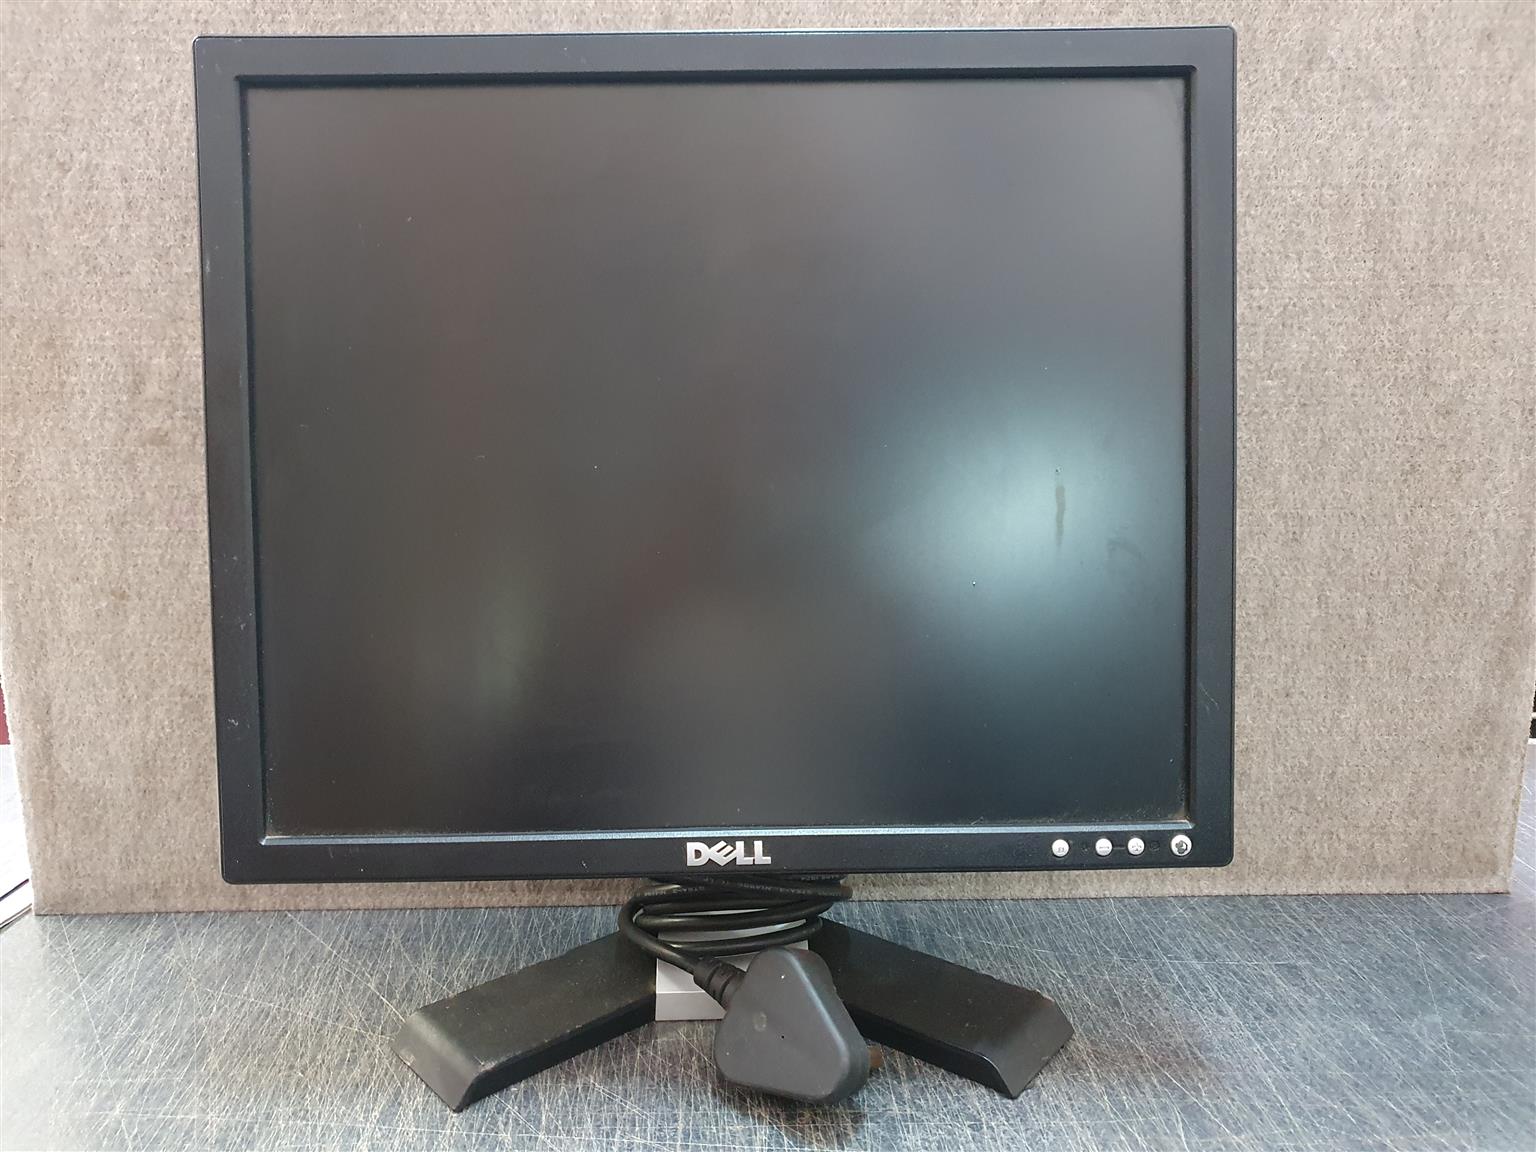 Monitor DELL  LCD 17" (43cm)  